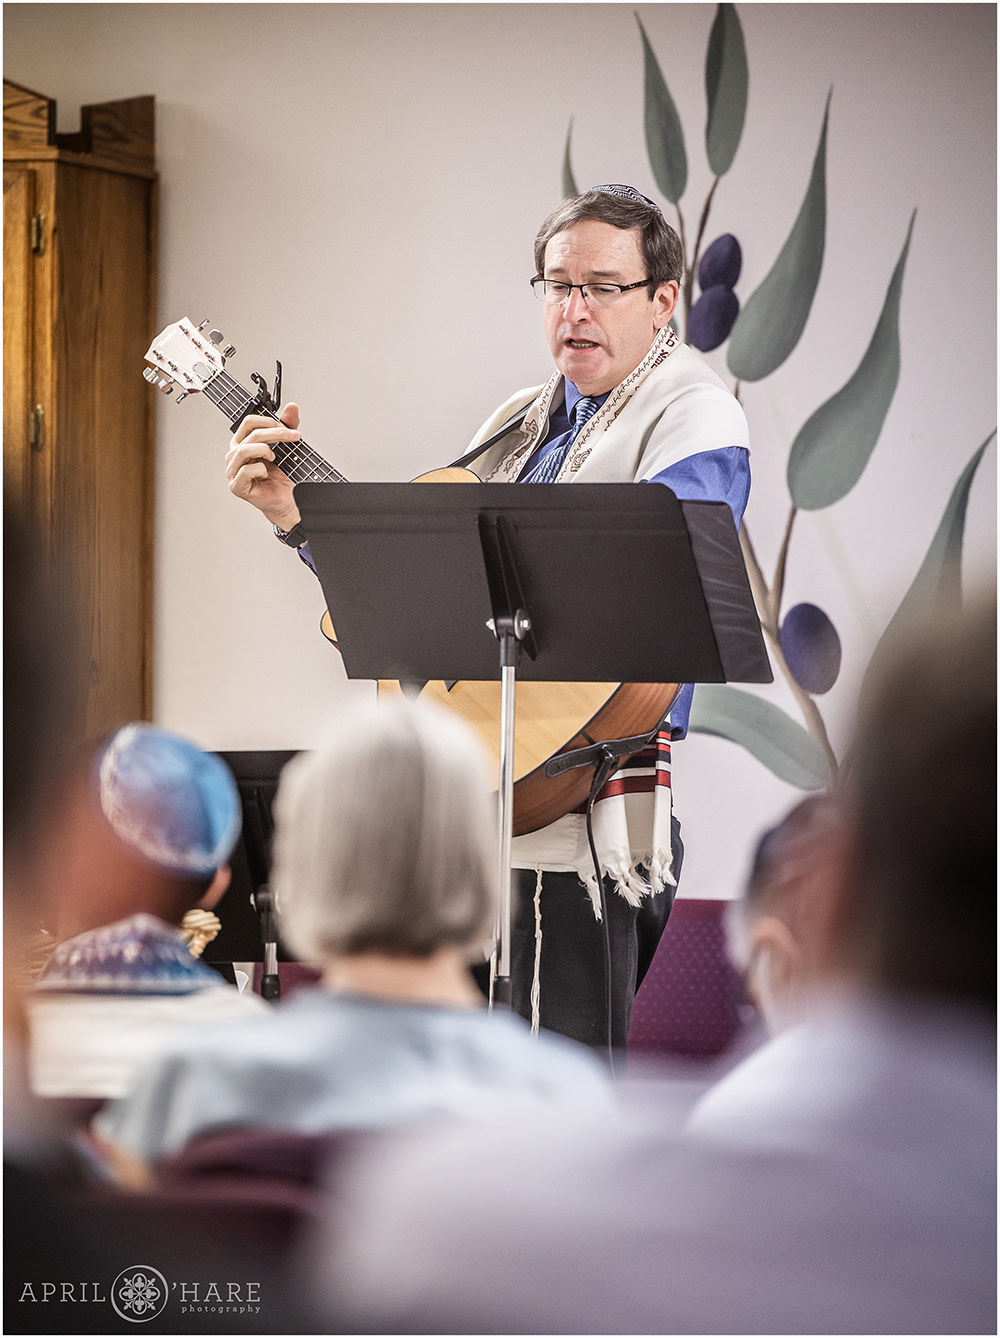 Cantor sings at a Bar mitzvah in Lakewood Colorado